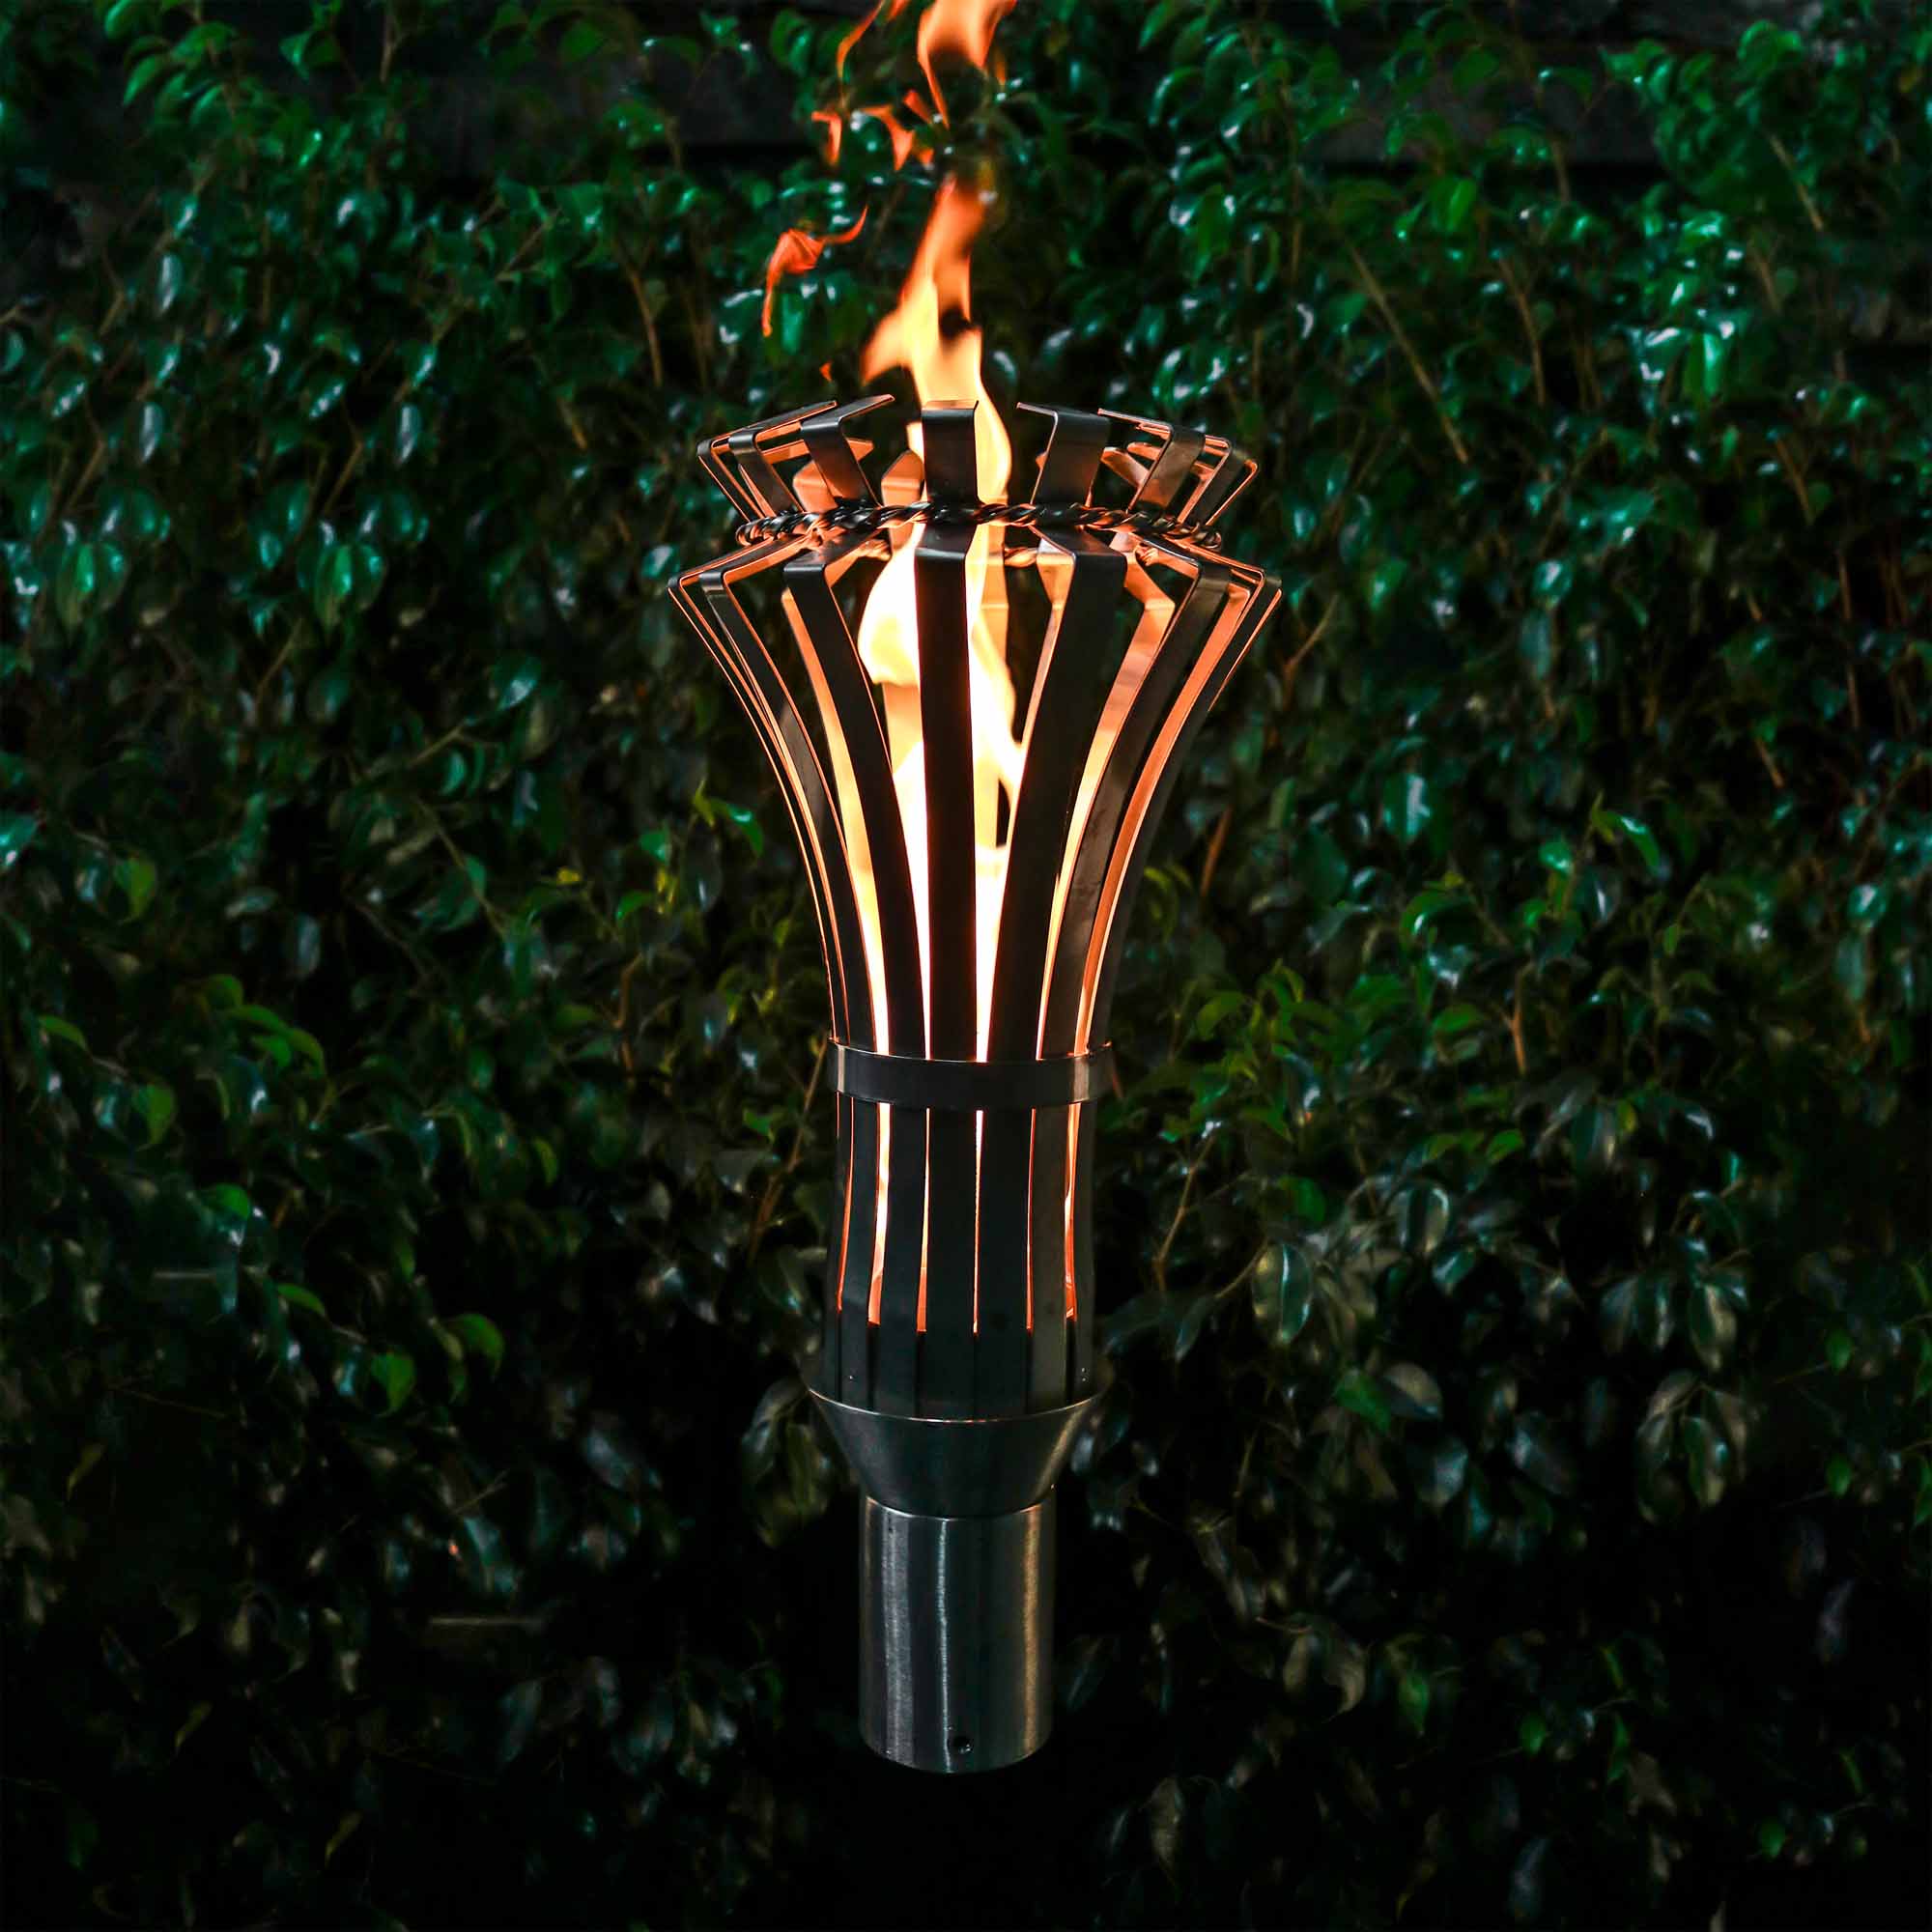 Gothic Fire Torch - Kozy Korner Fire Pits